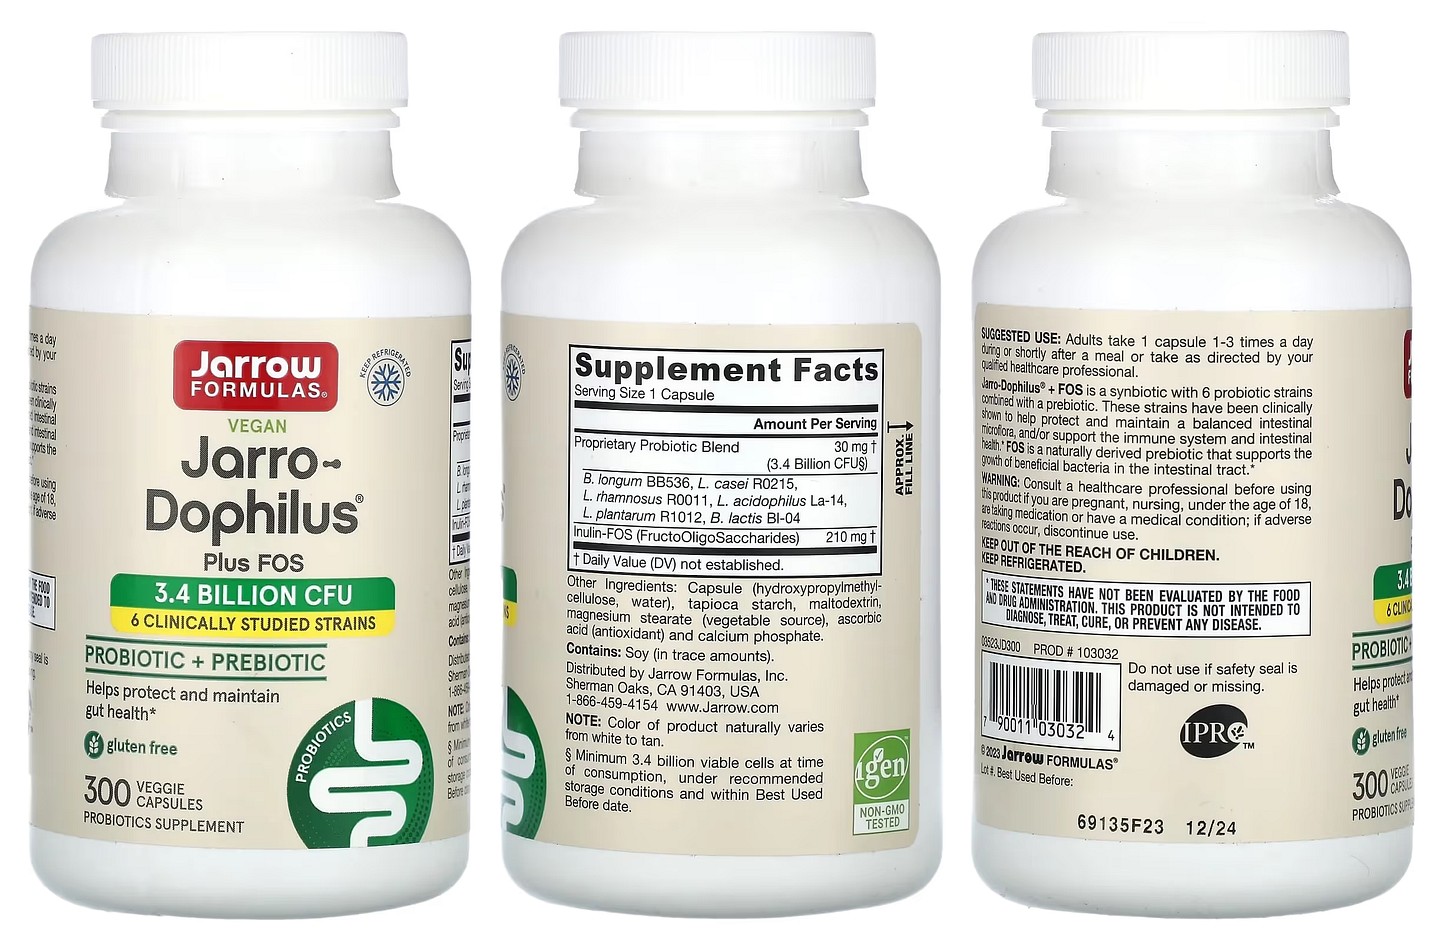 Jarrow Formulas, Vegan Jarro-Dophilus Plus FOS packaging